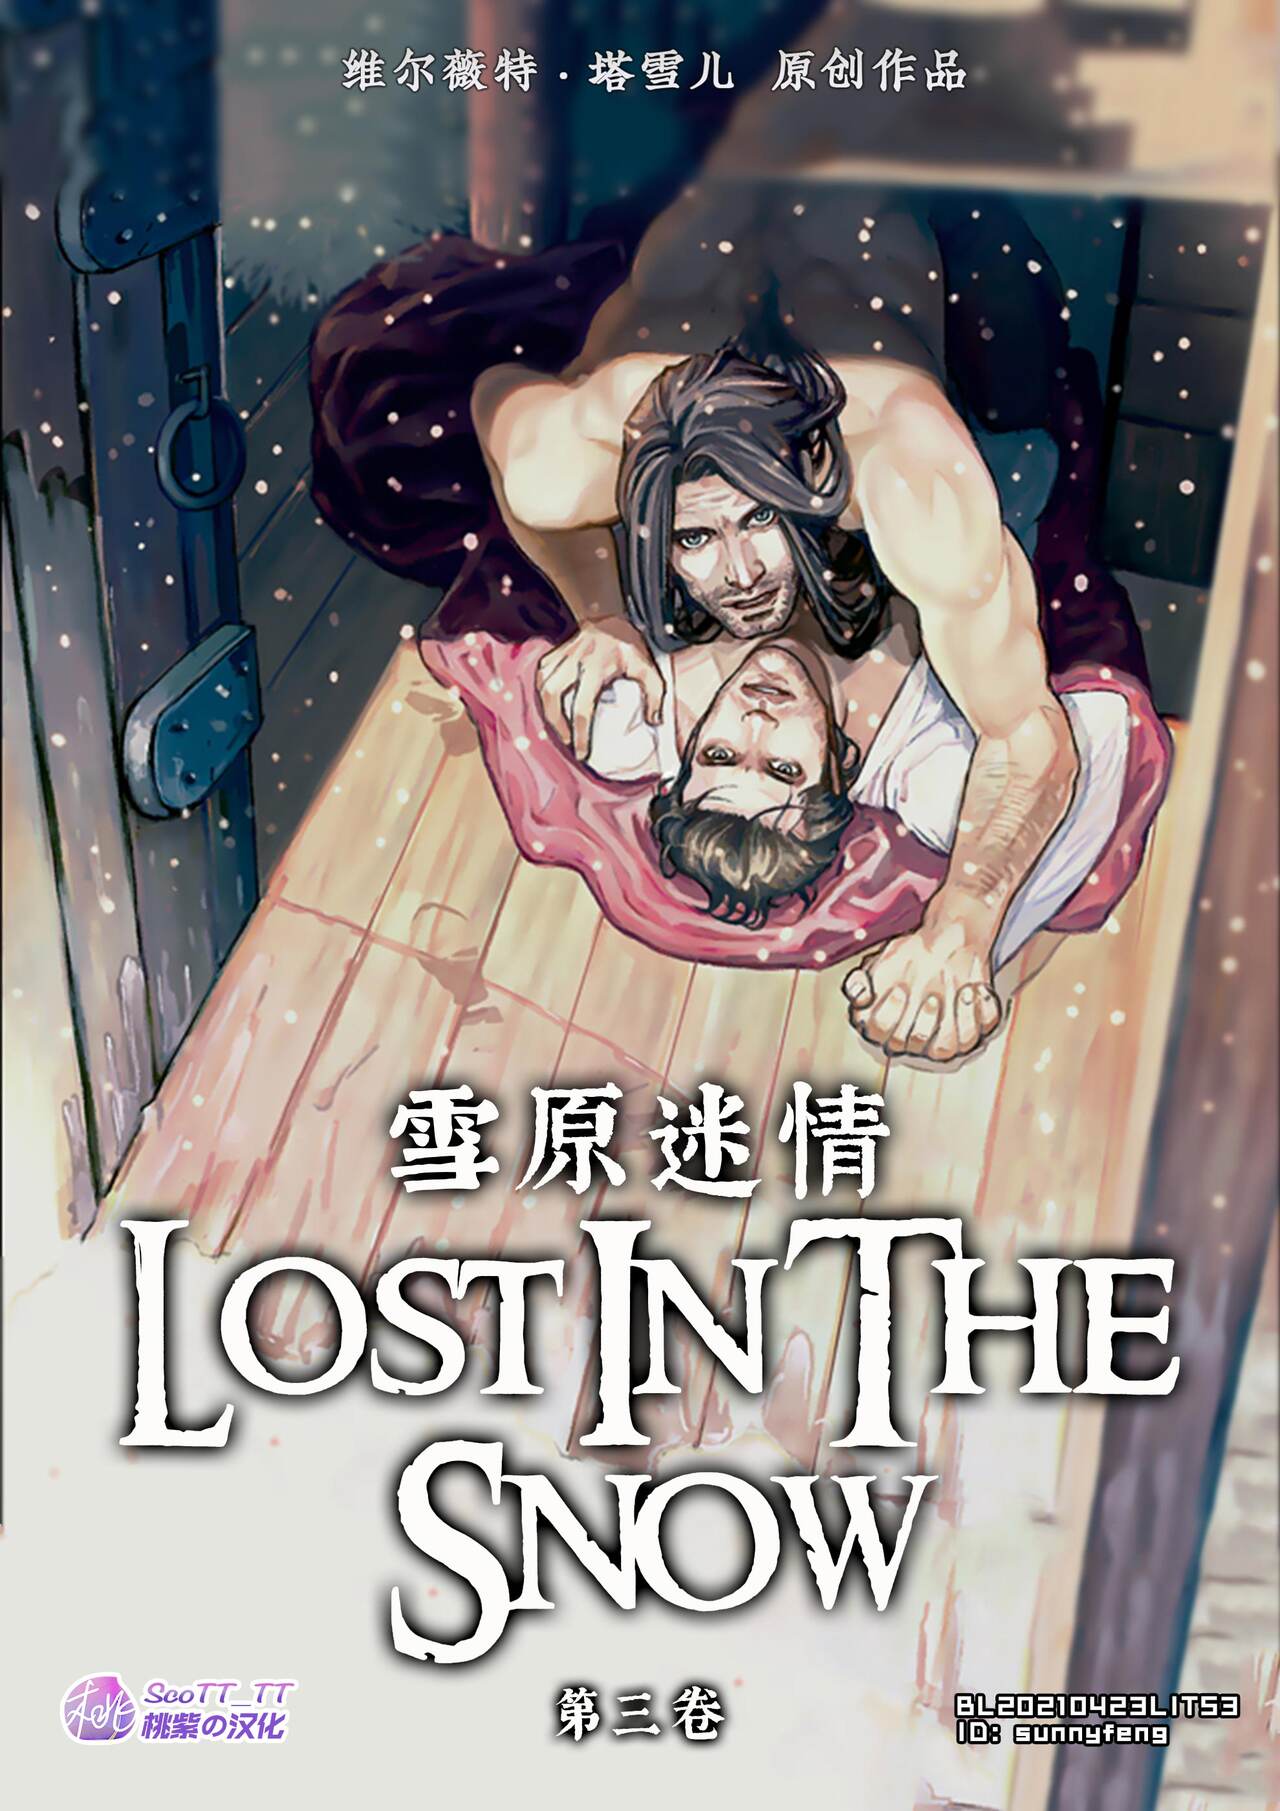 [Velvet Toucher] Lost in the Snow - Chapter 3 | 雪原迷情 [Chinese] [桃紫 ScoTT_TT] 